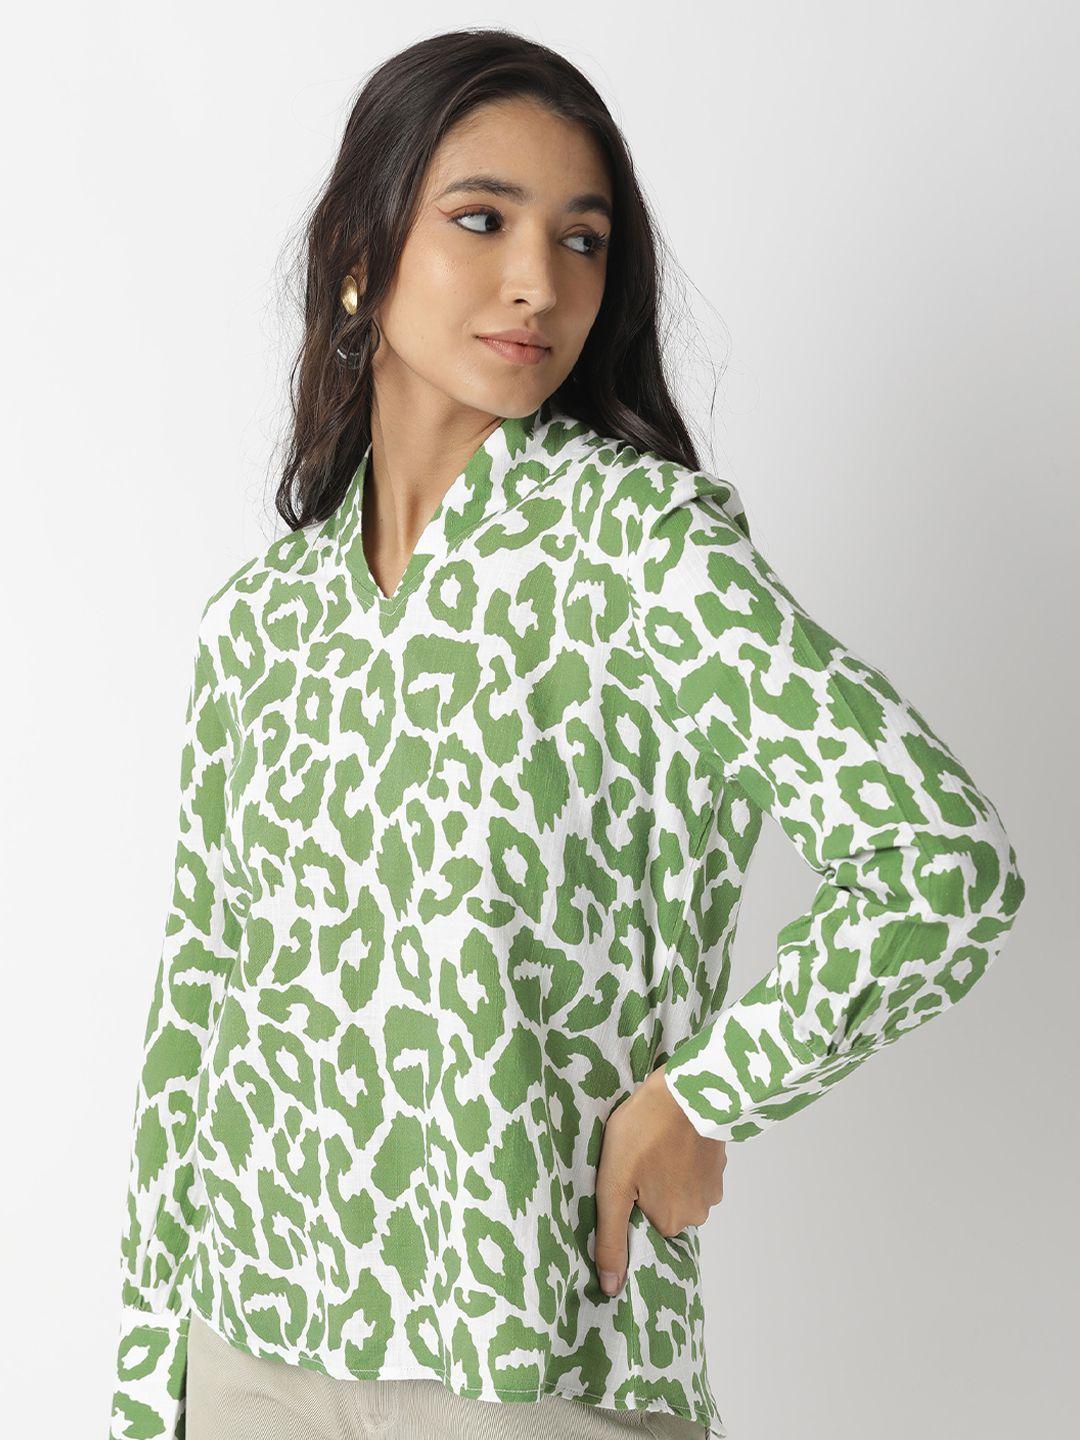 rareism women white & green printed shirt style top